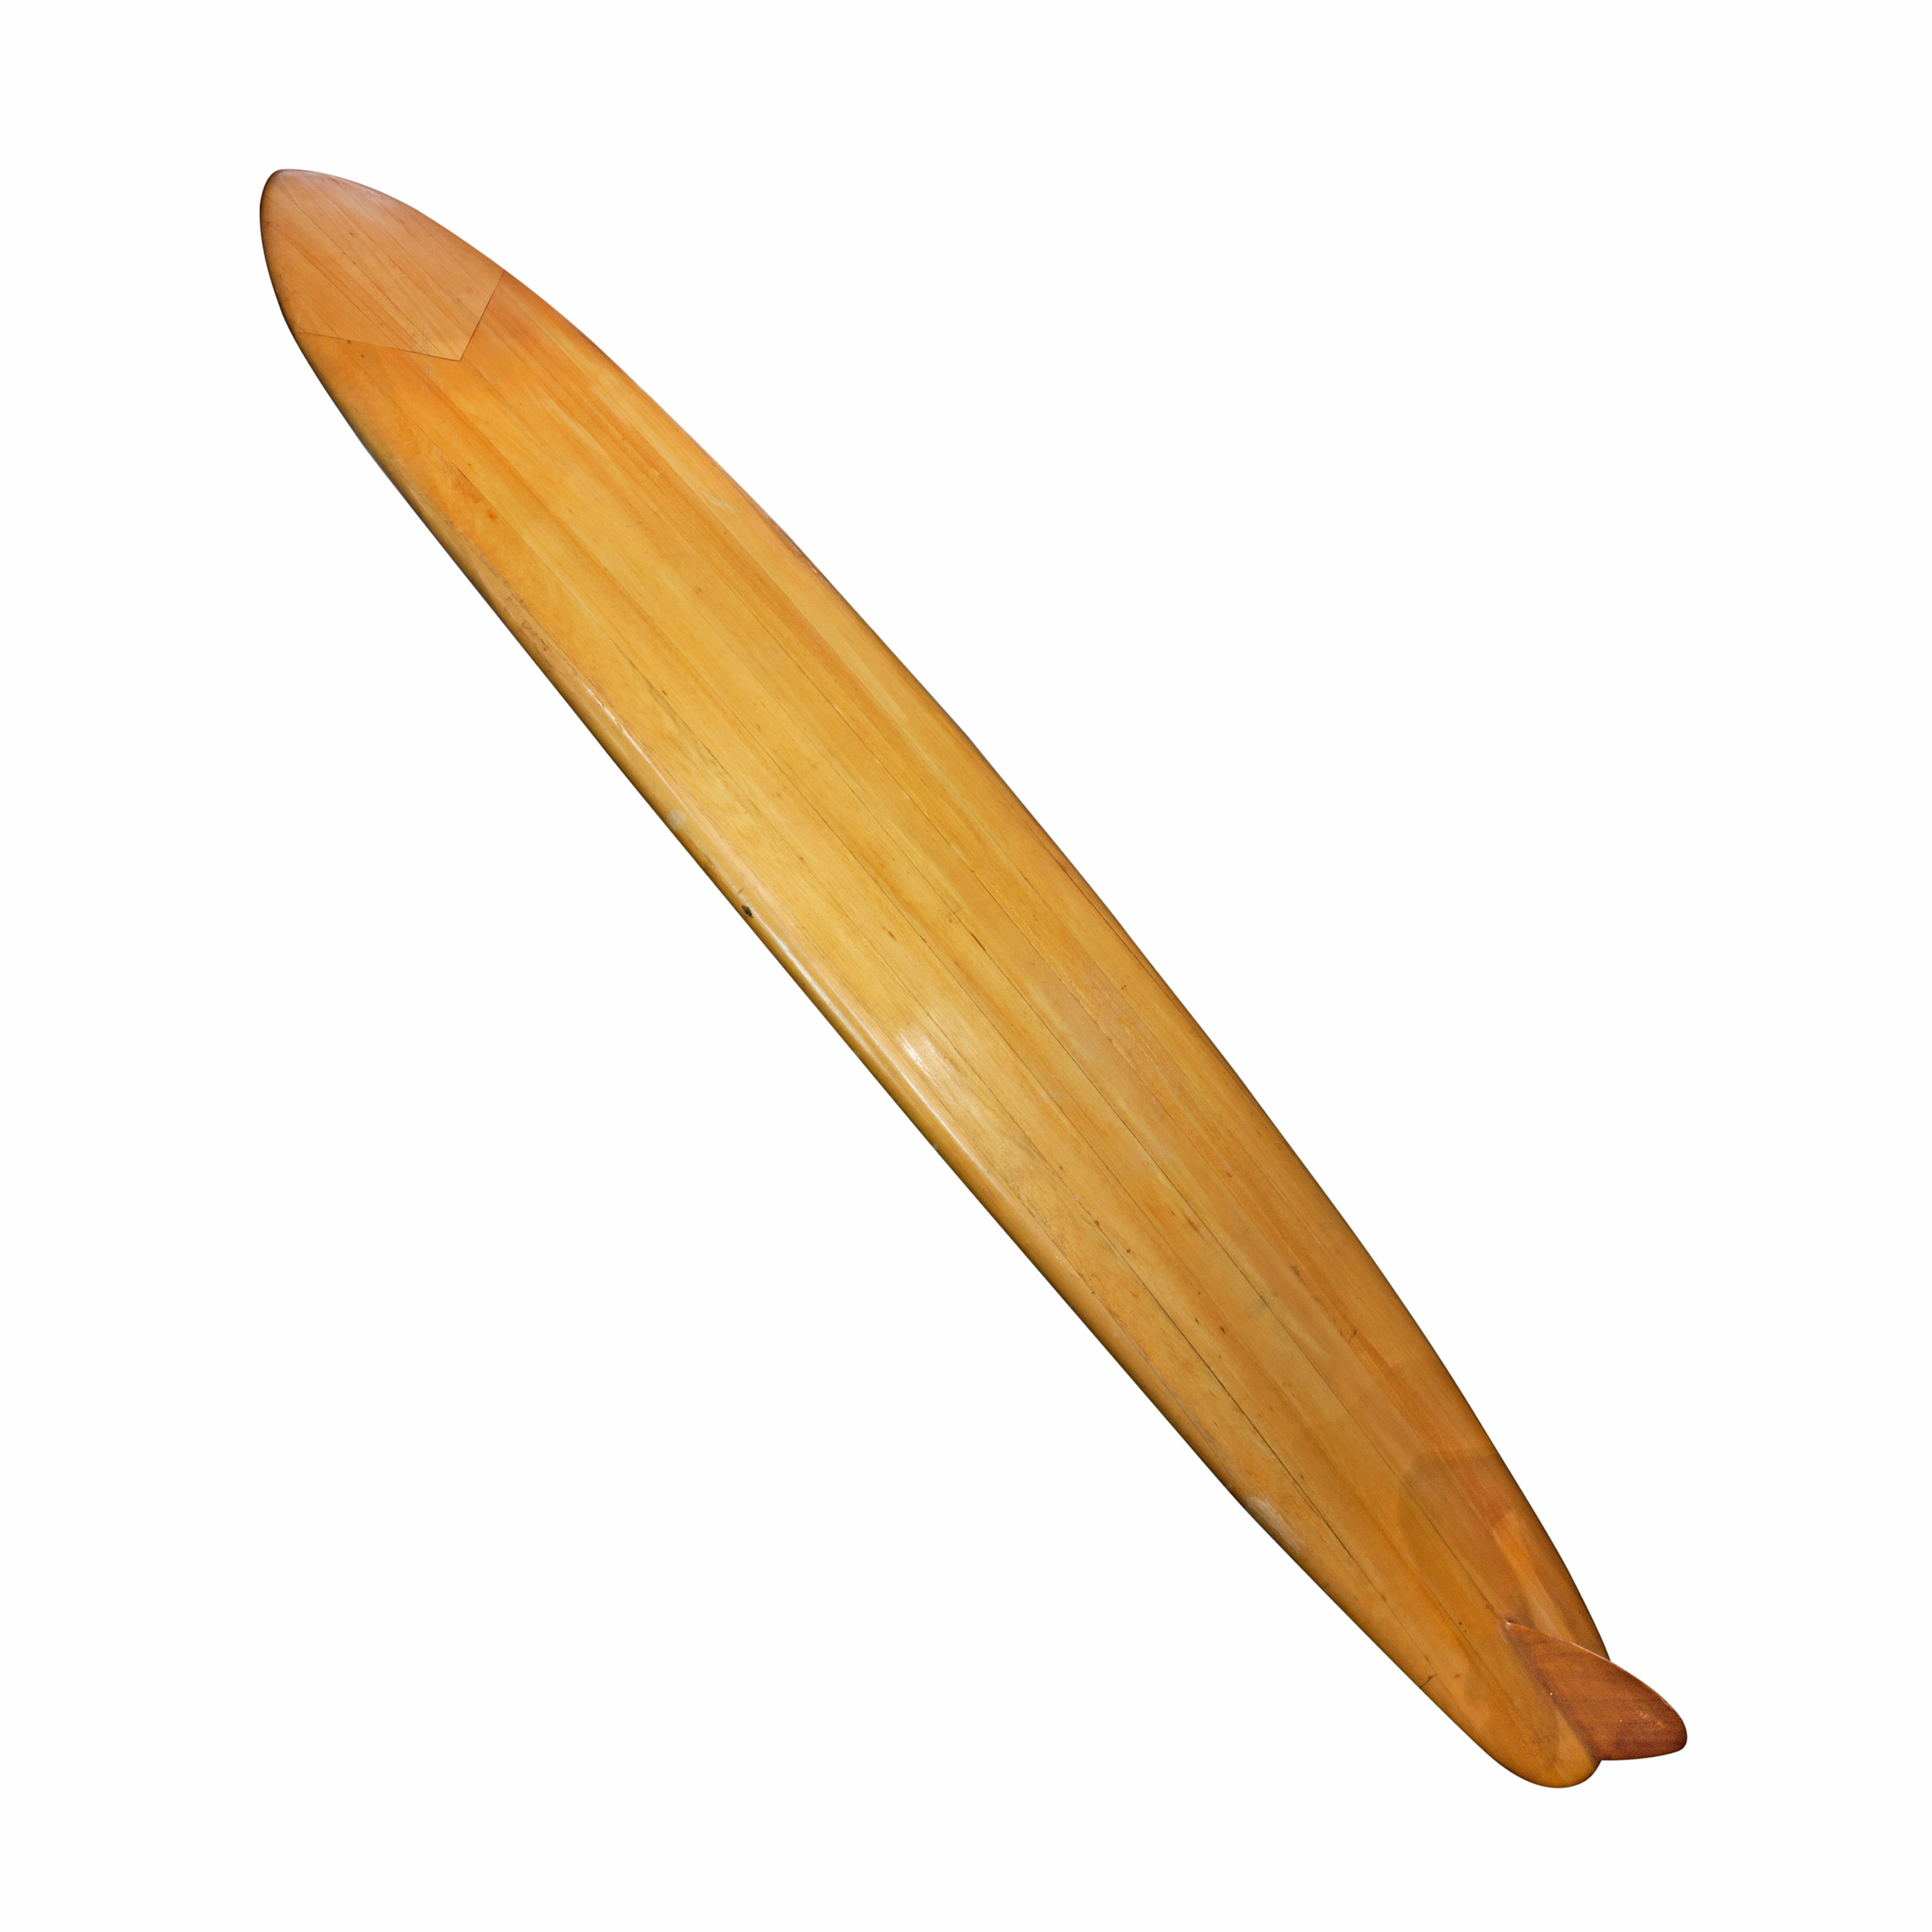 AN EARLY HOBIE BALSA WOOD SURFBOARD 2d1cf3